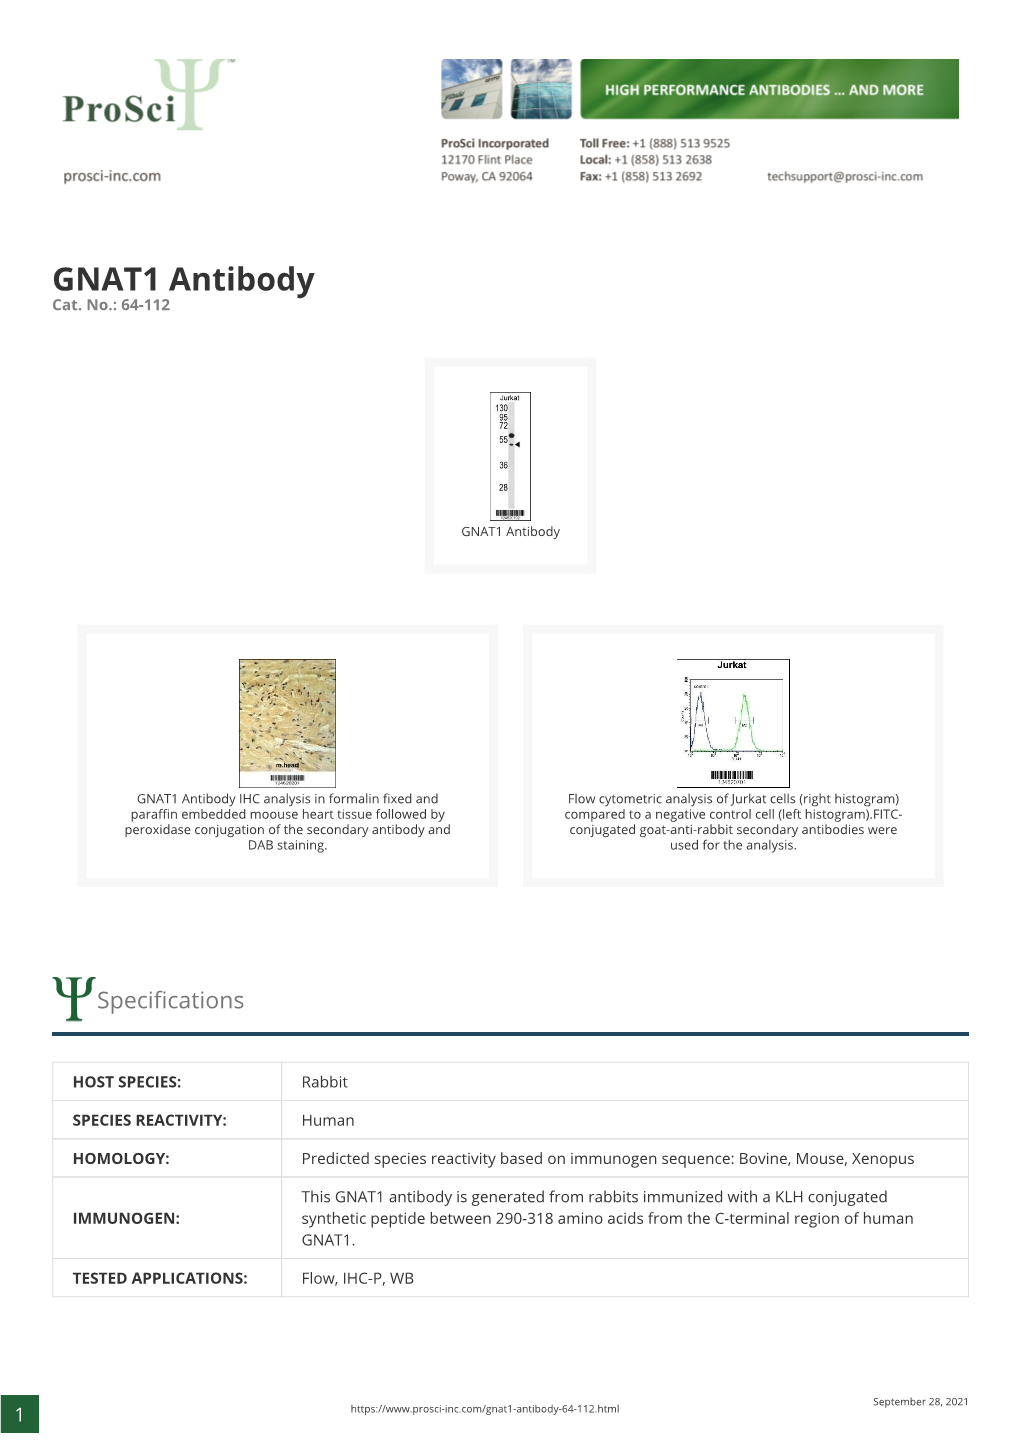 GNAT1 Antibody Cat